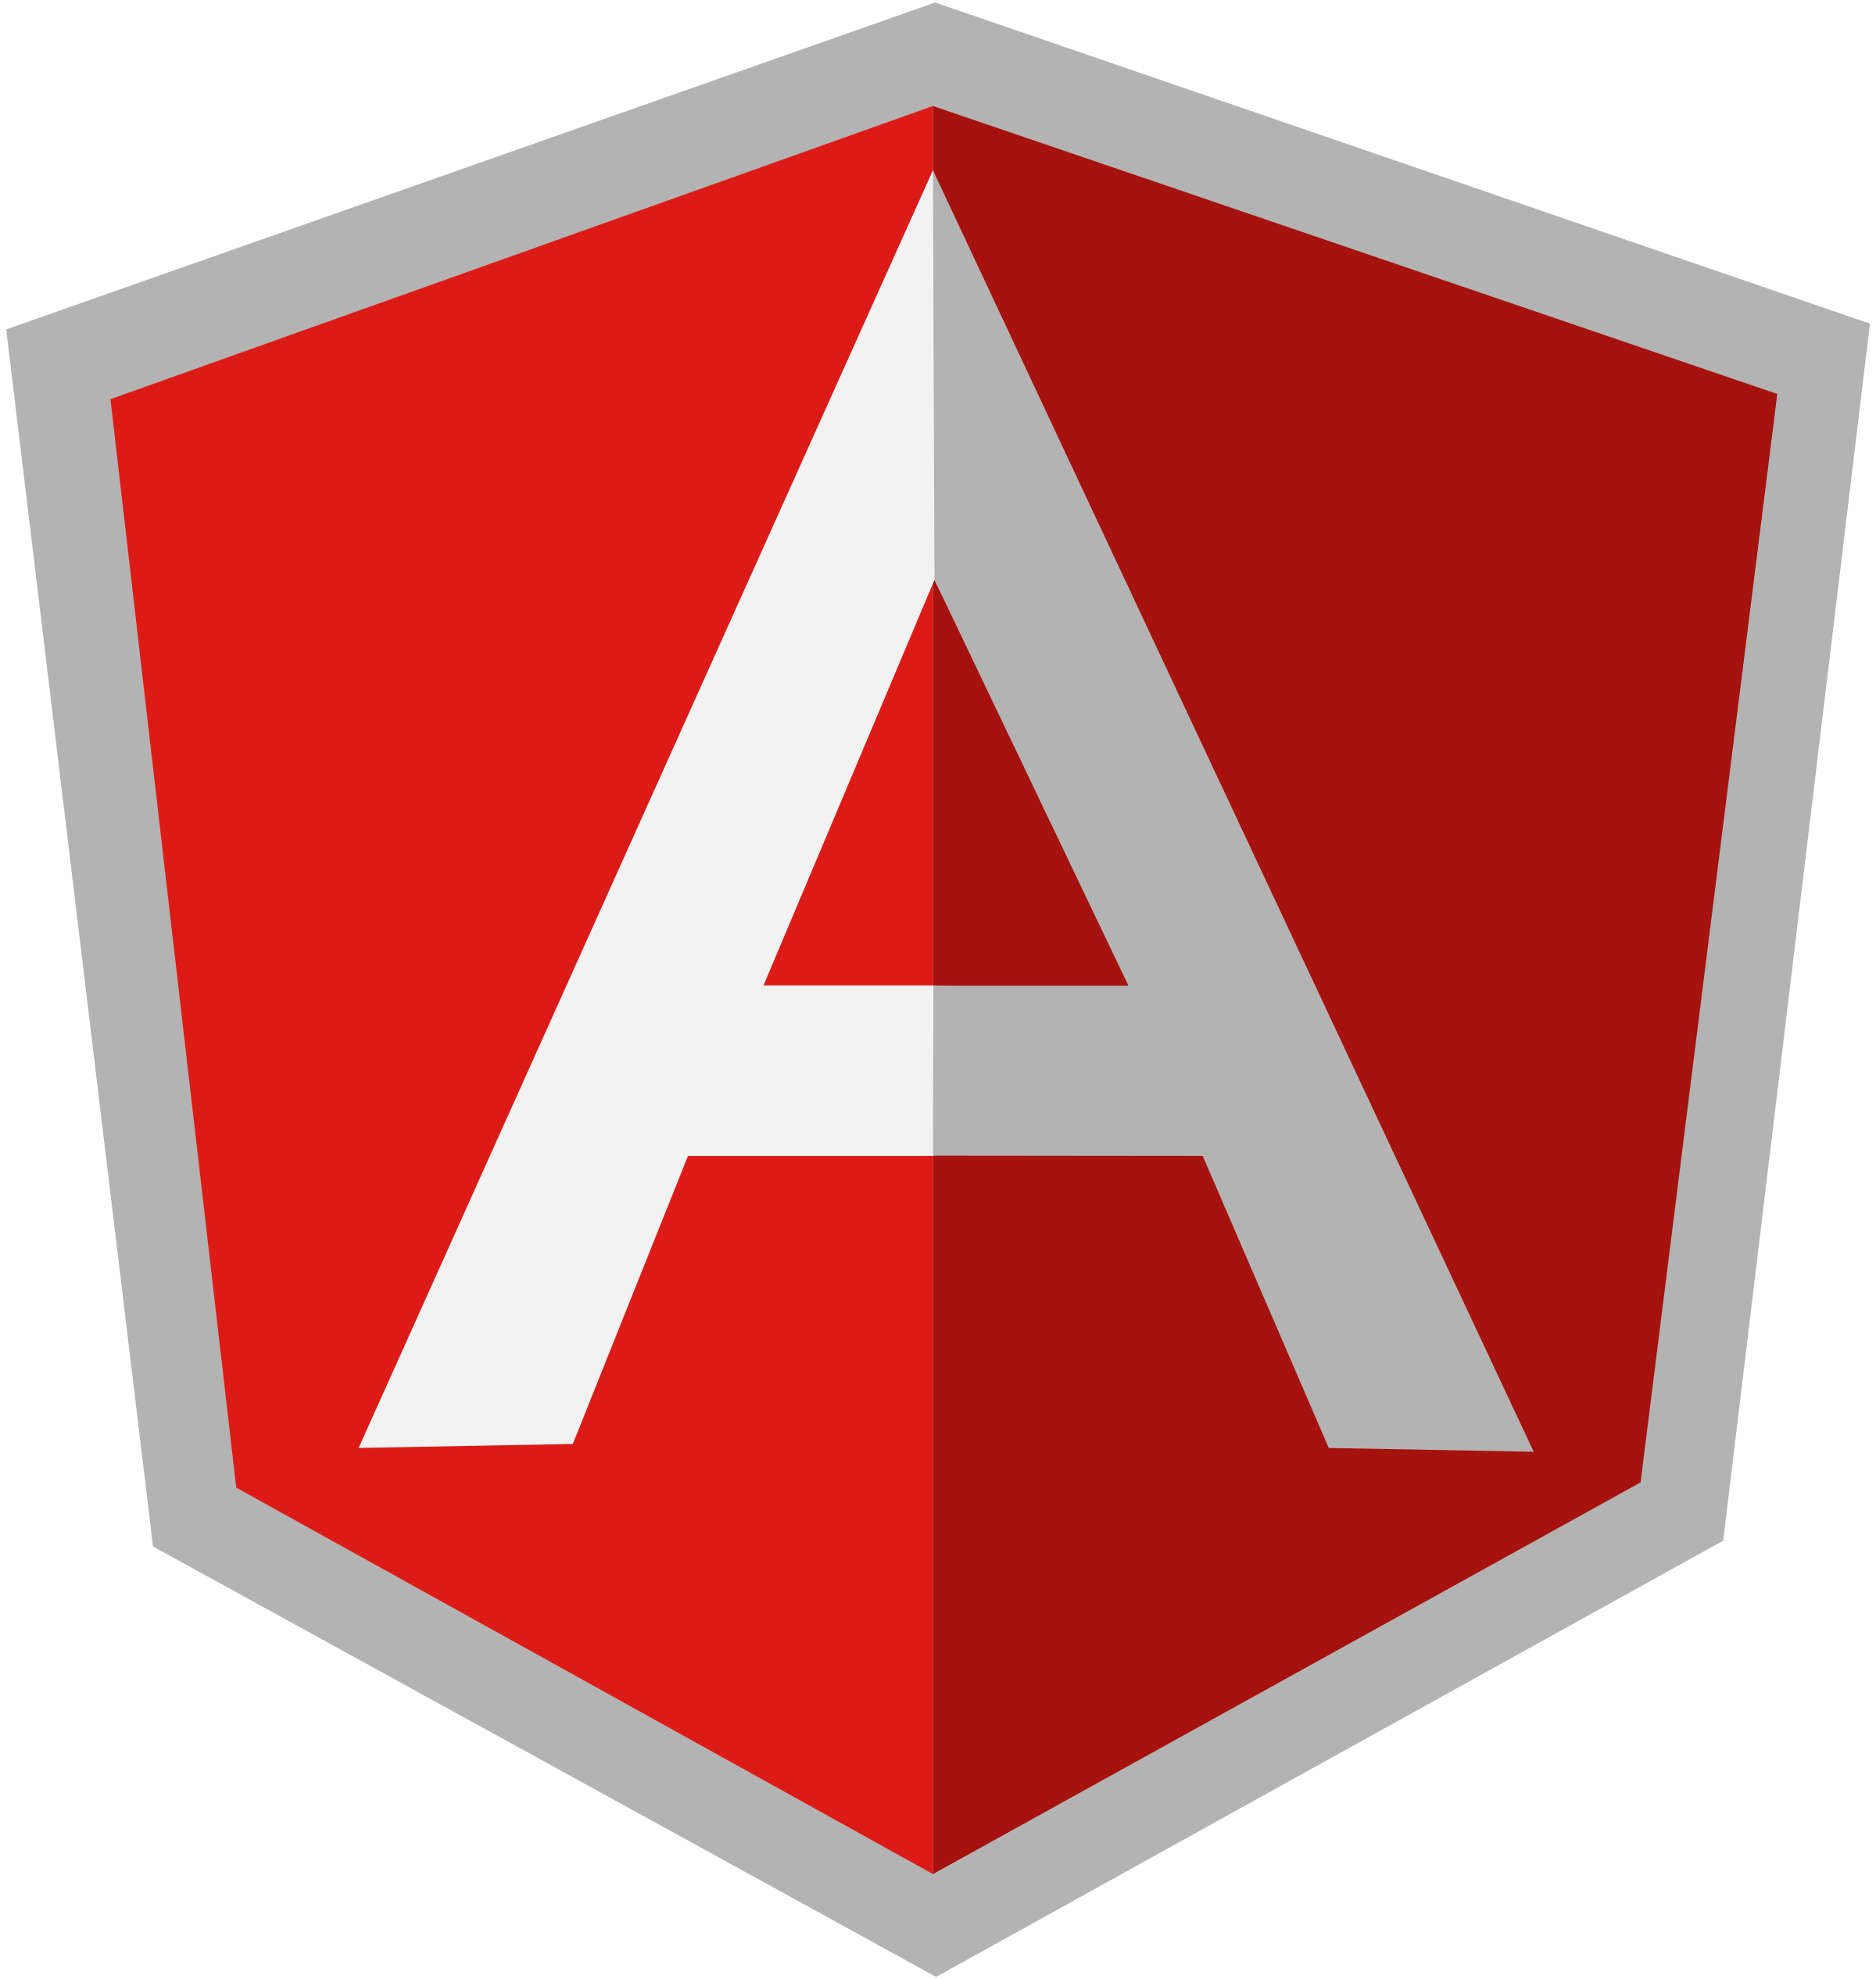 angular icon logo png transparent